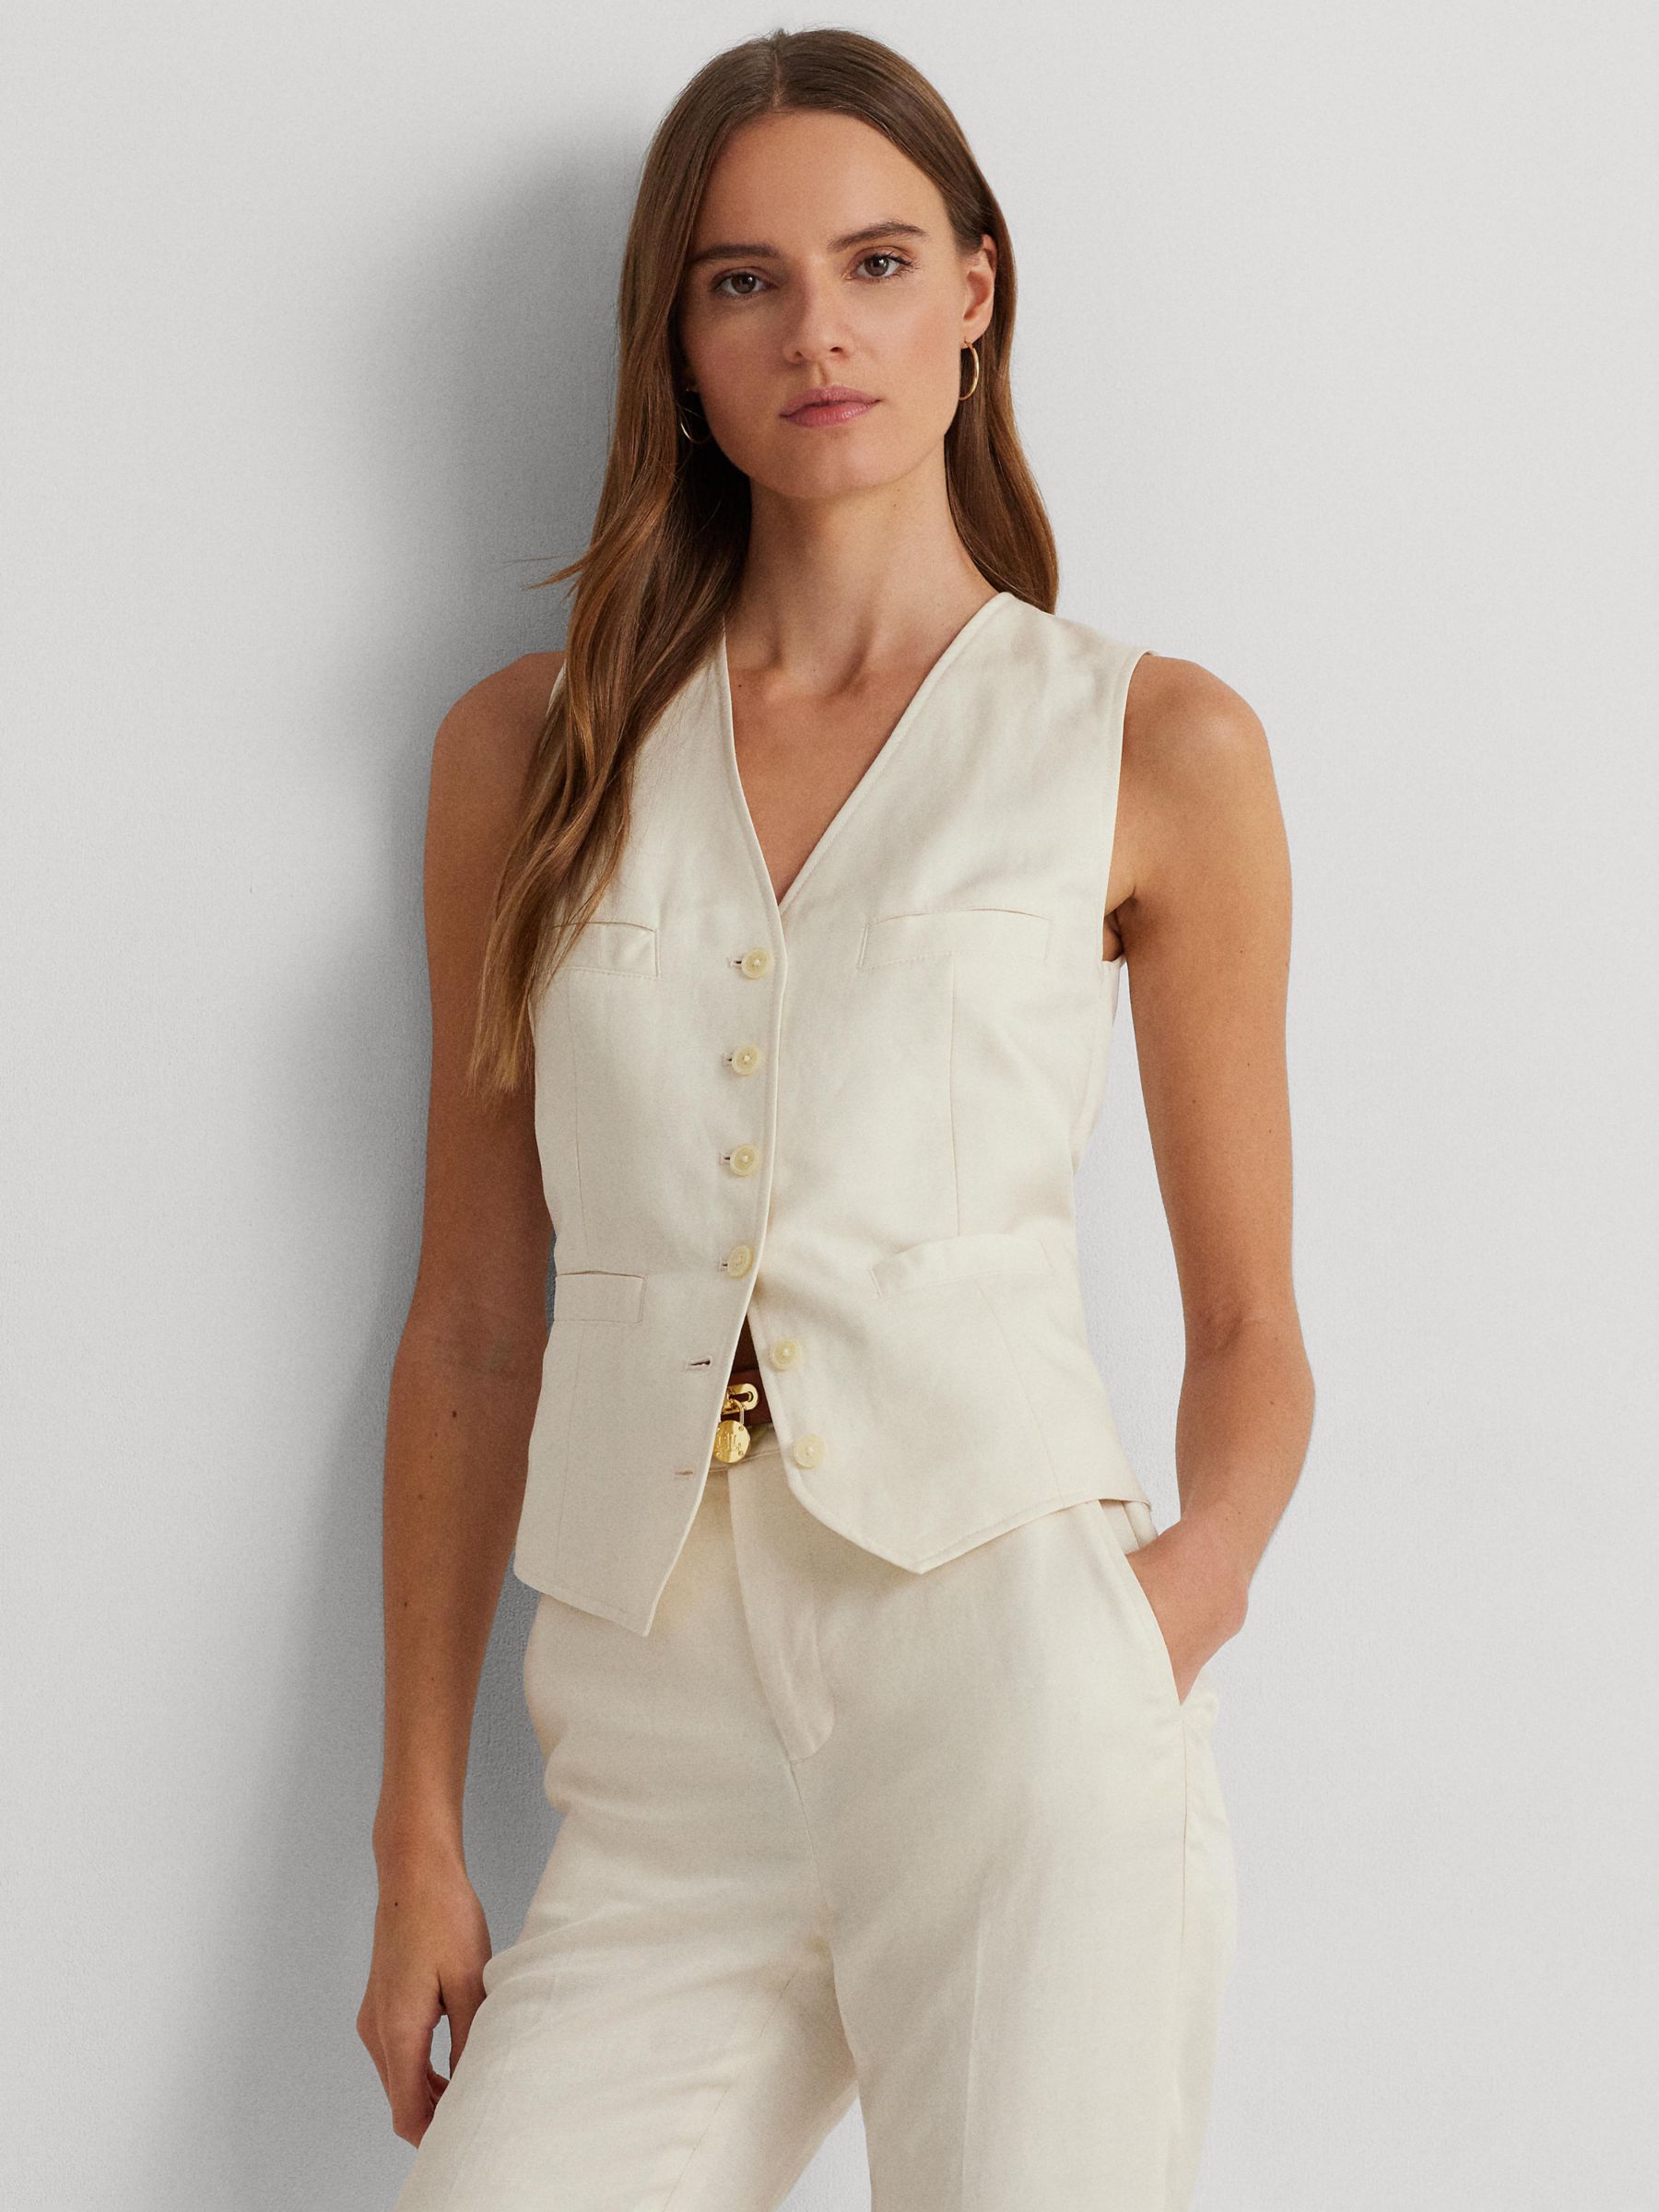 Lauren Ralph Lauren Linen Blend Twill Vest, Natural Cream, 8